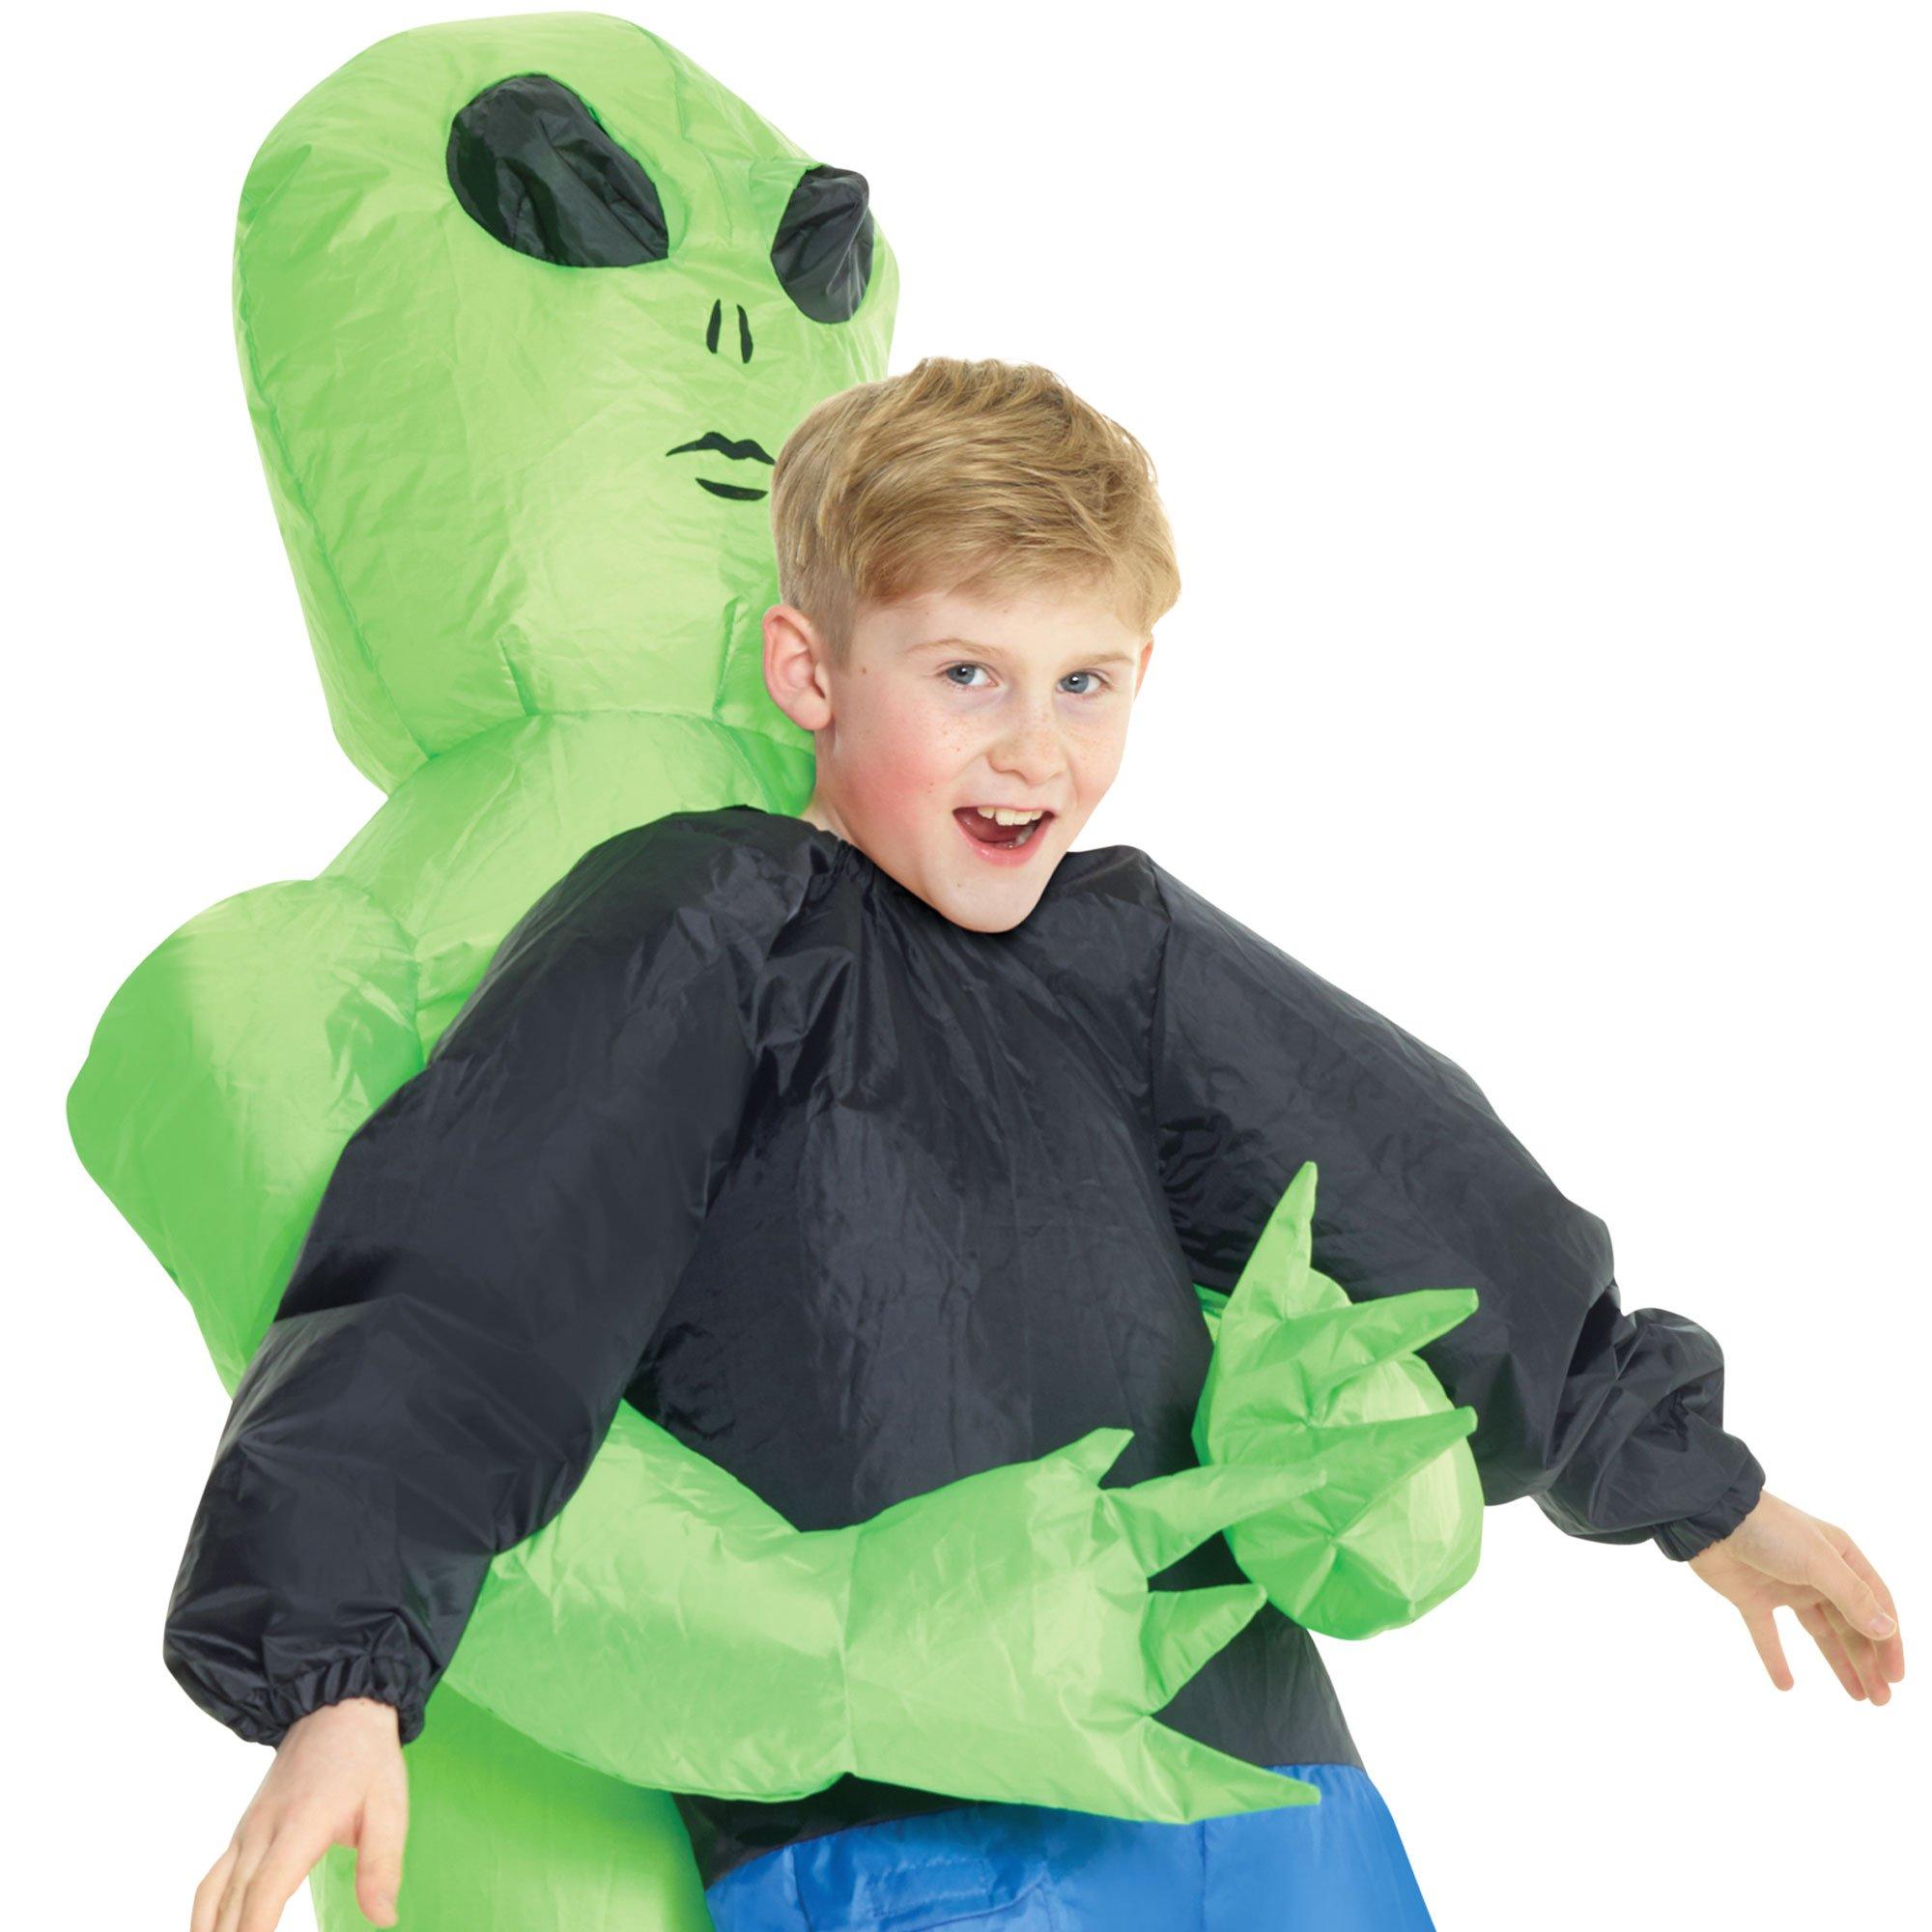 Kids Giant Inflatable Alien Costume